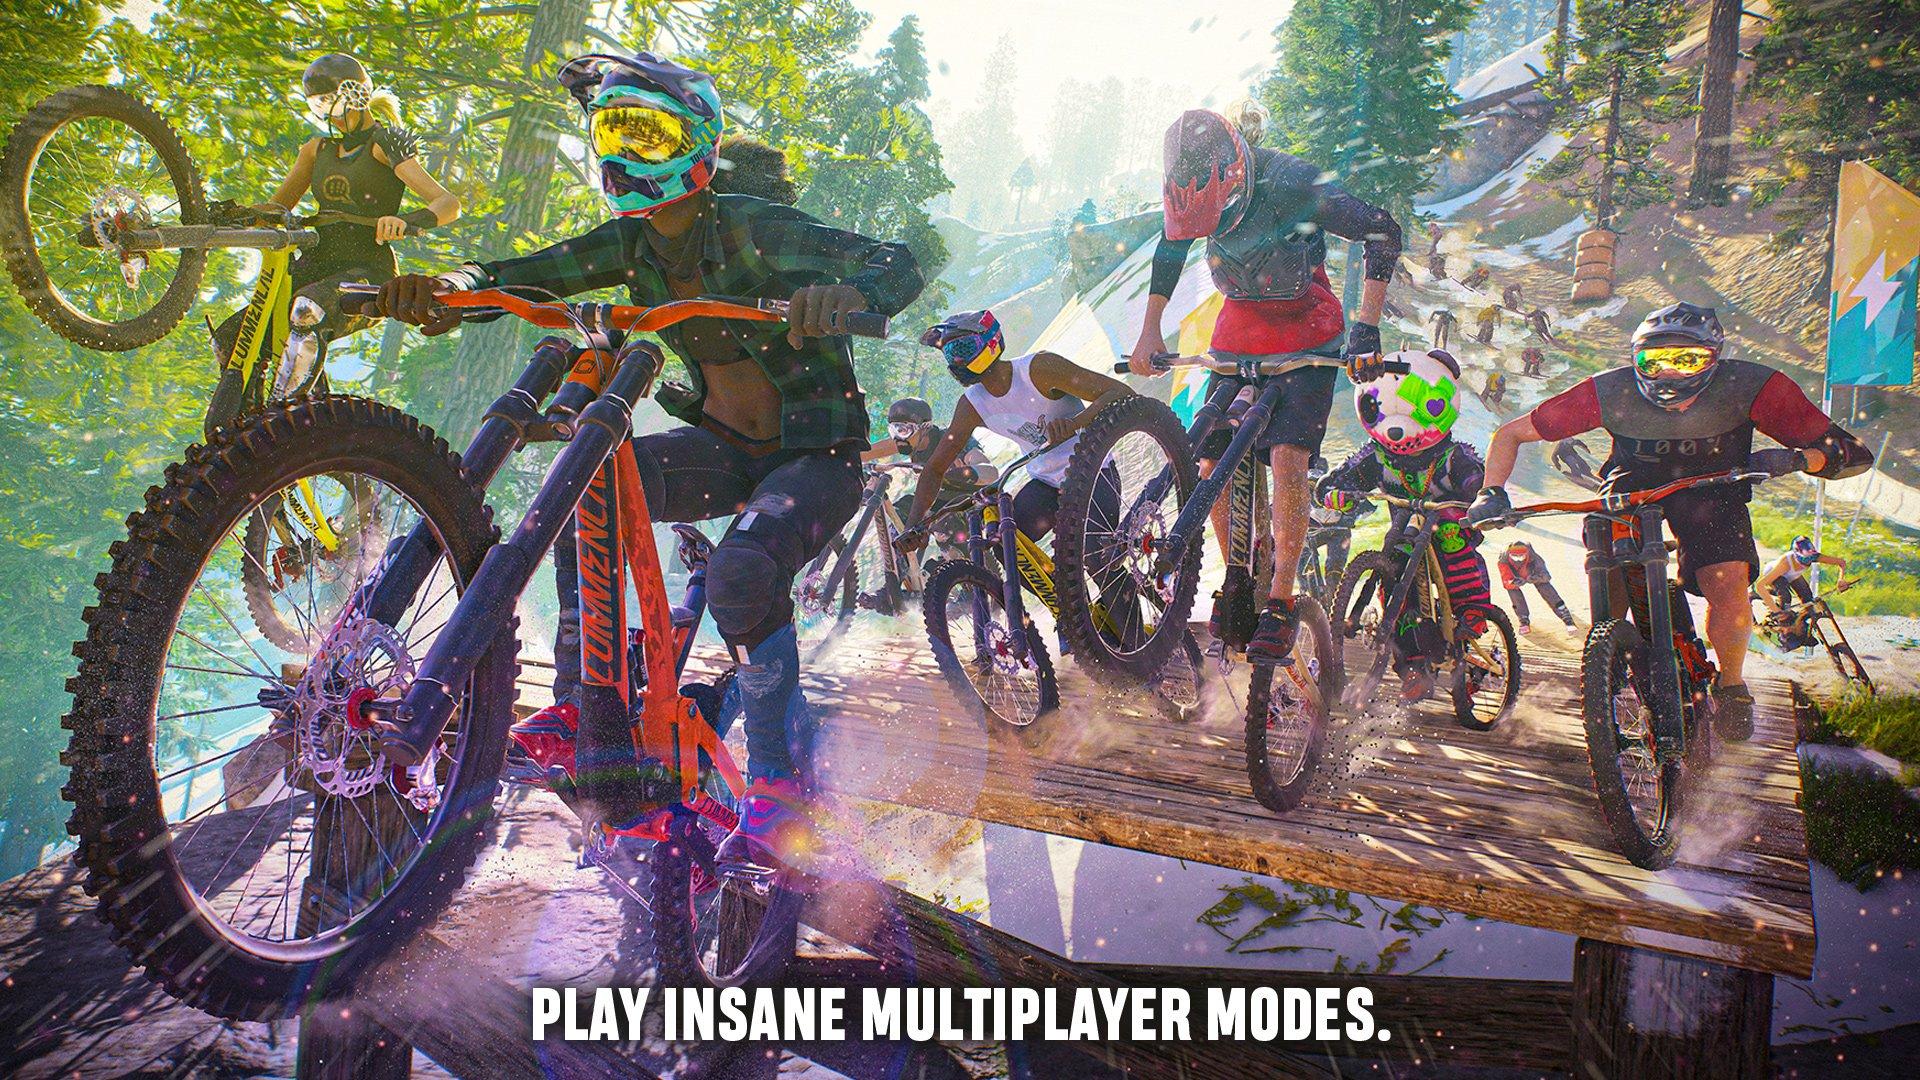  Rider's Republic (PS5) : Video Games